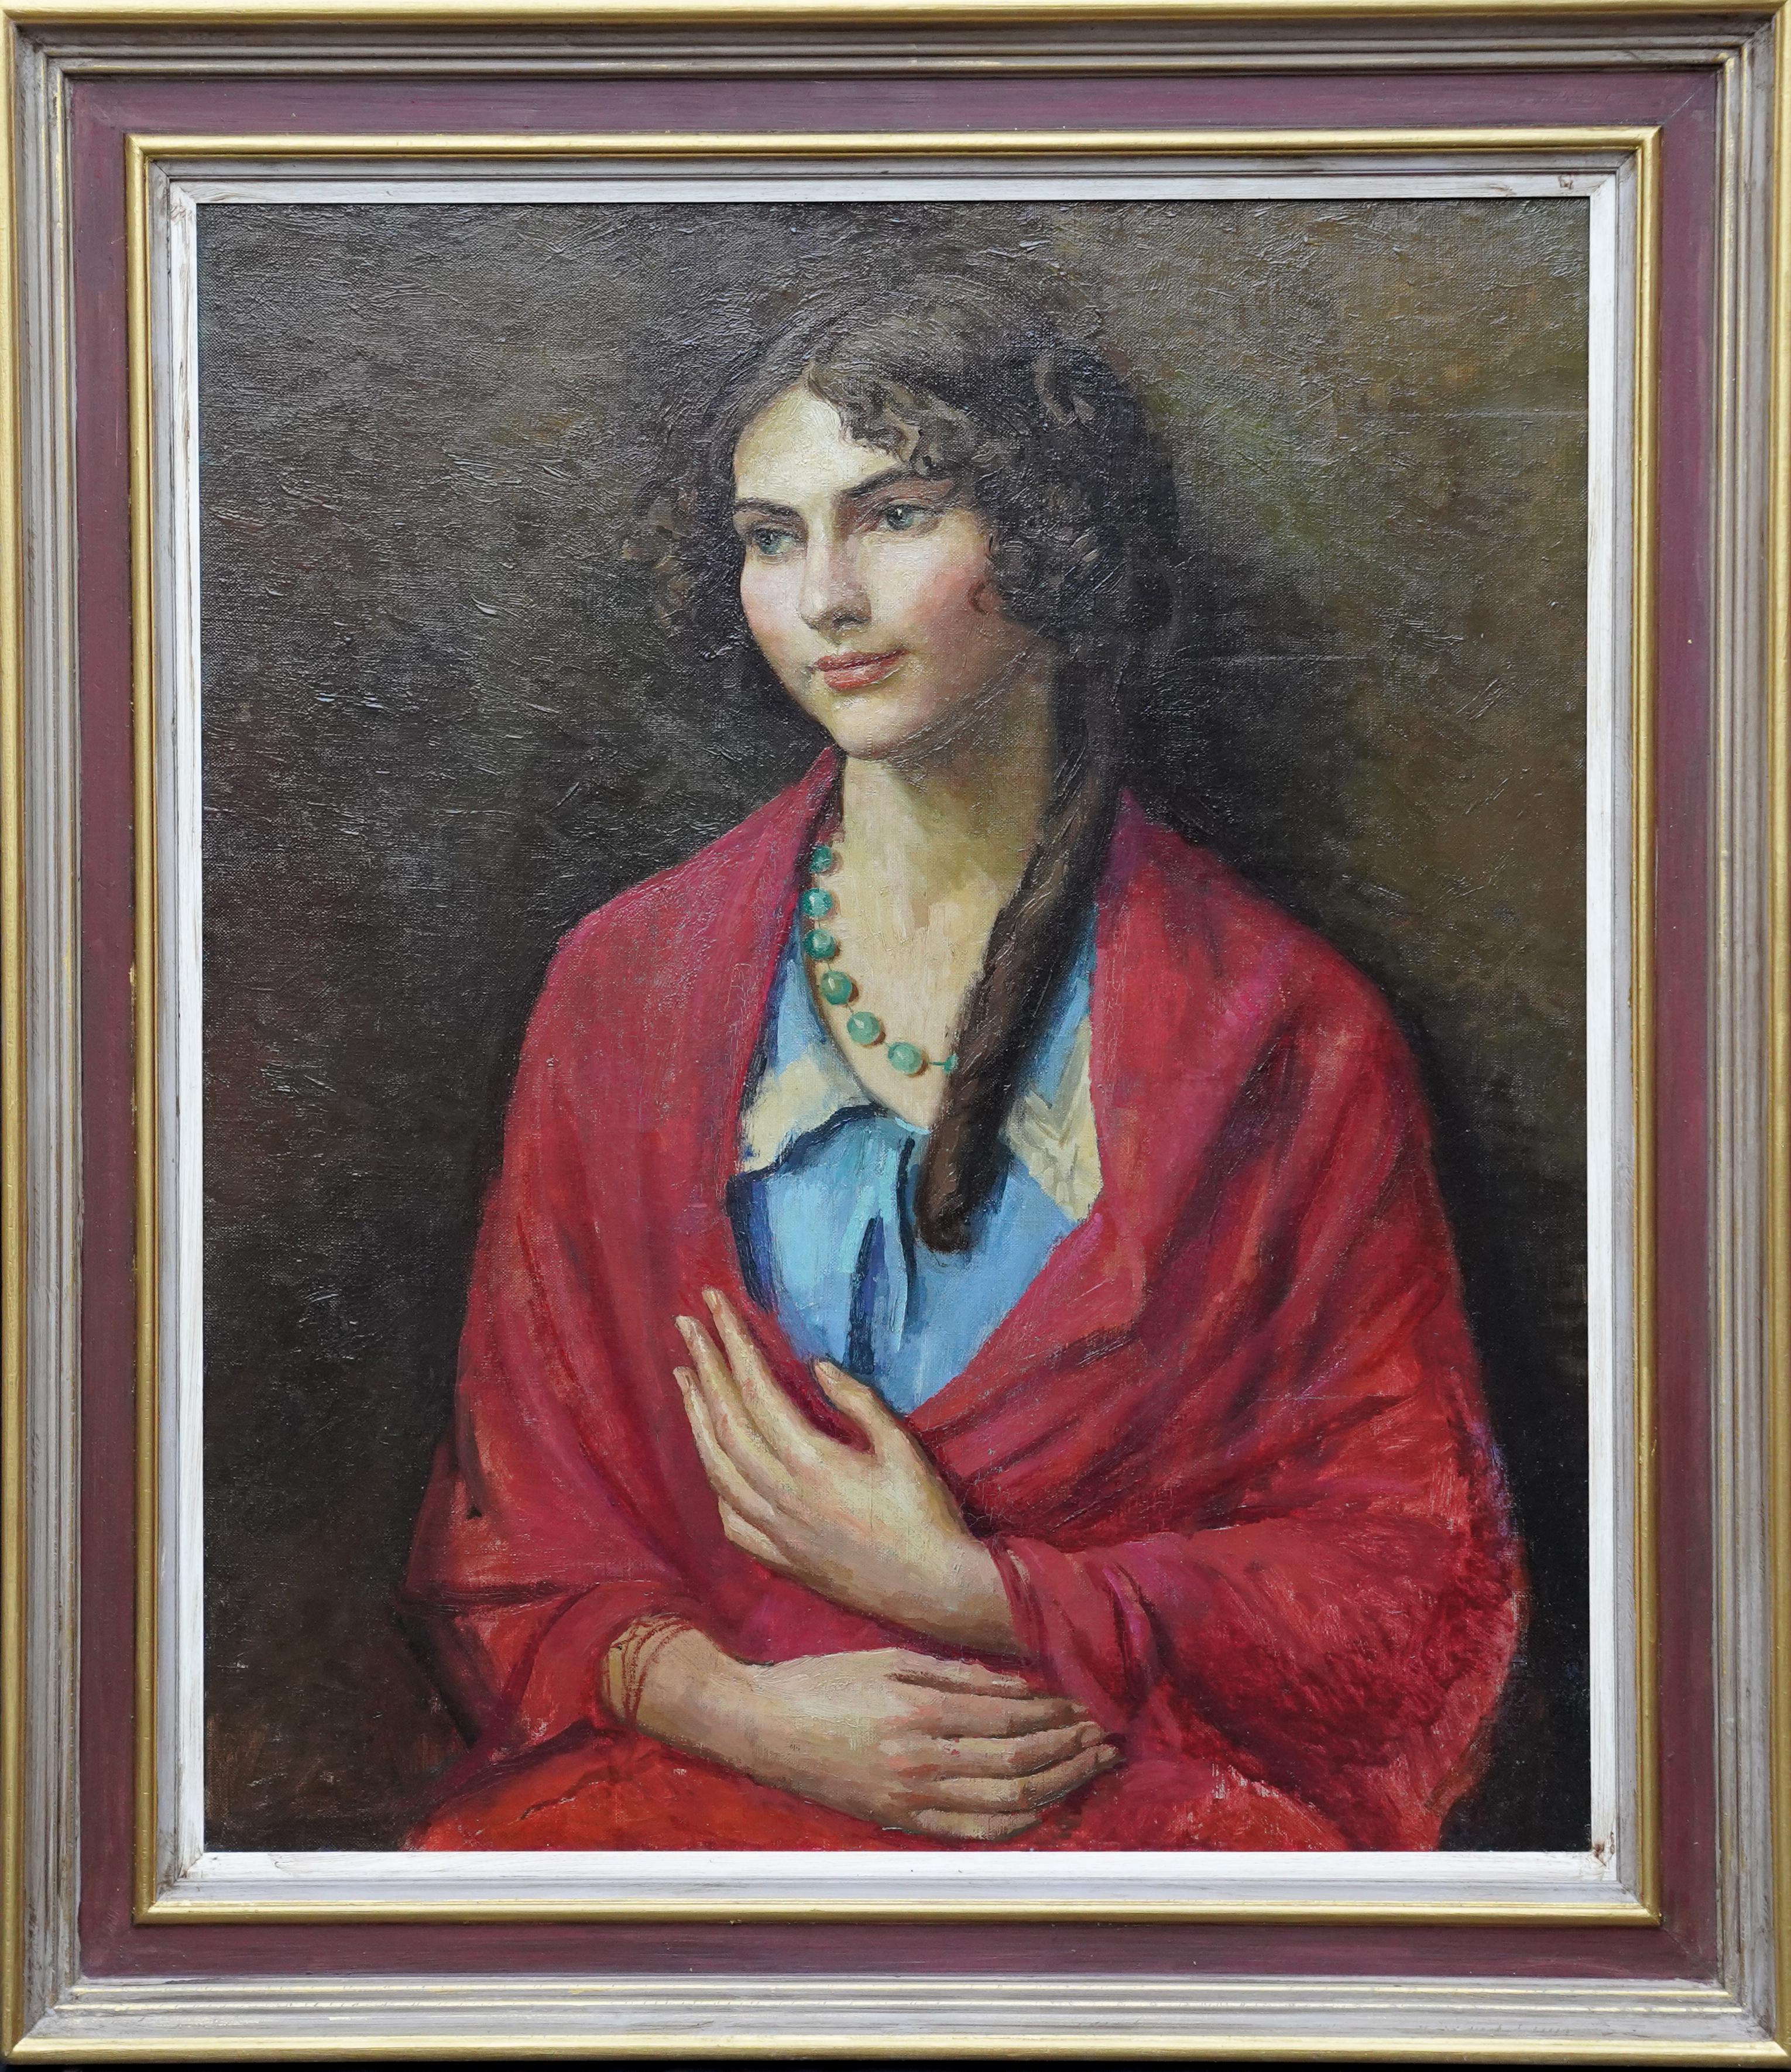 Lionel Ellis Portrait Painting - Portrait of Woman in Red Shawl - Nudes verso - British 1940's art oil painting